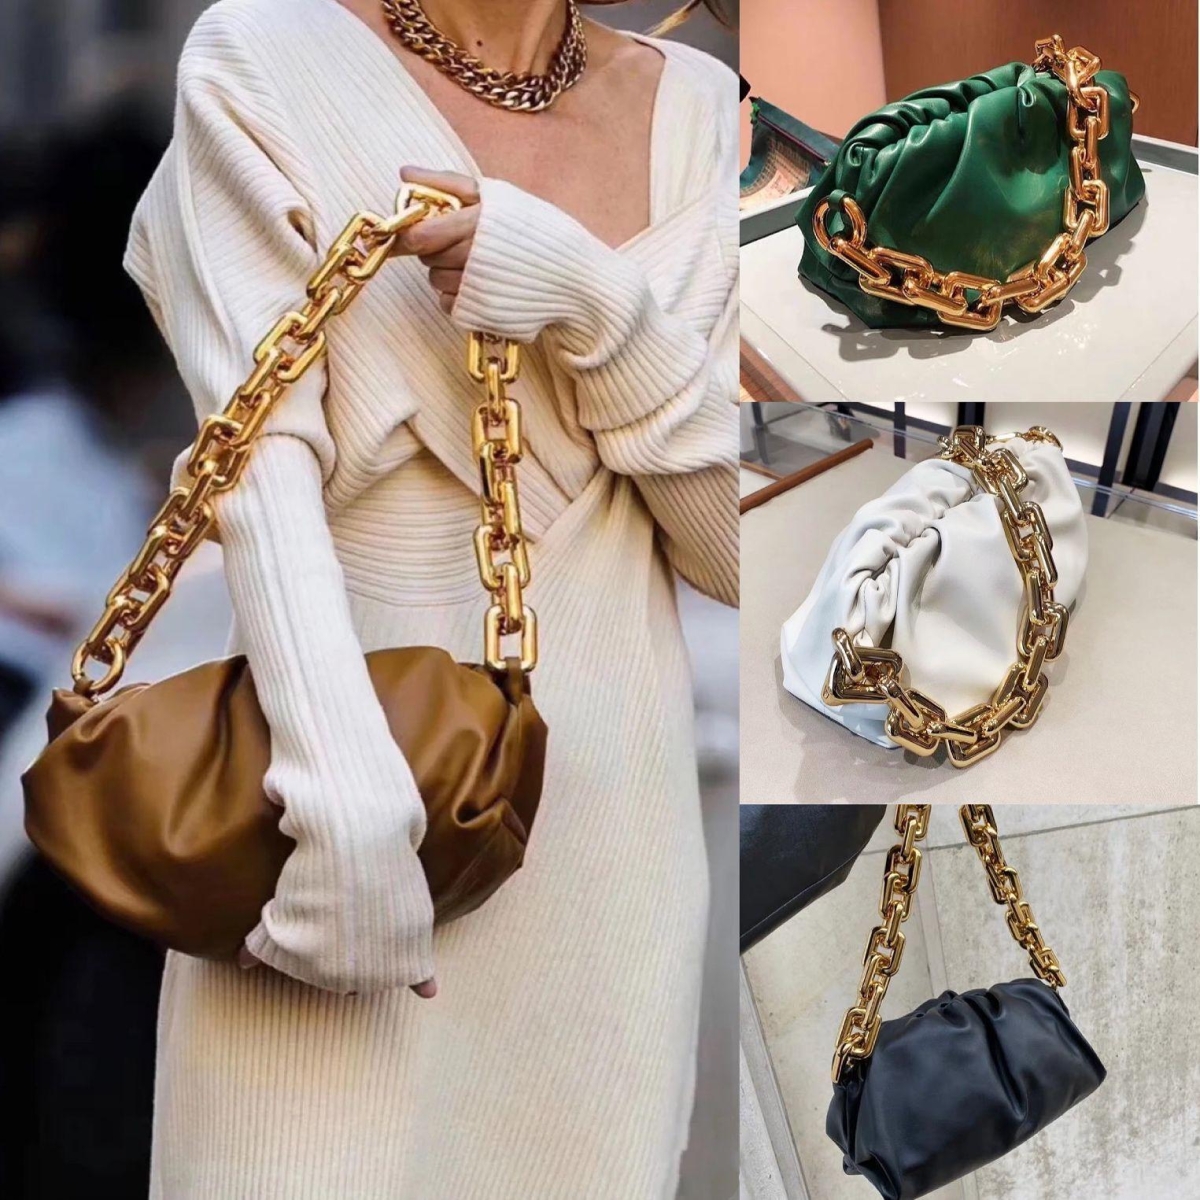 50 Inch Gold Handbag Chain - Crossbody Strap - Chain For Bride Clutch -  Designer Bag Chain - Evening Bag Strap - Handmade by Green Acorn Kitchen